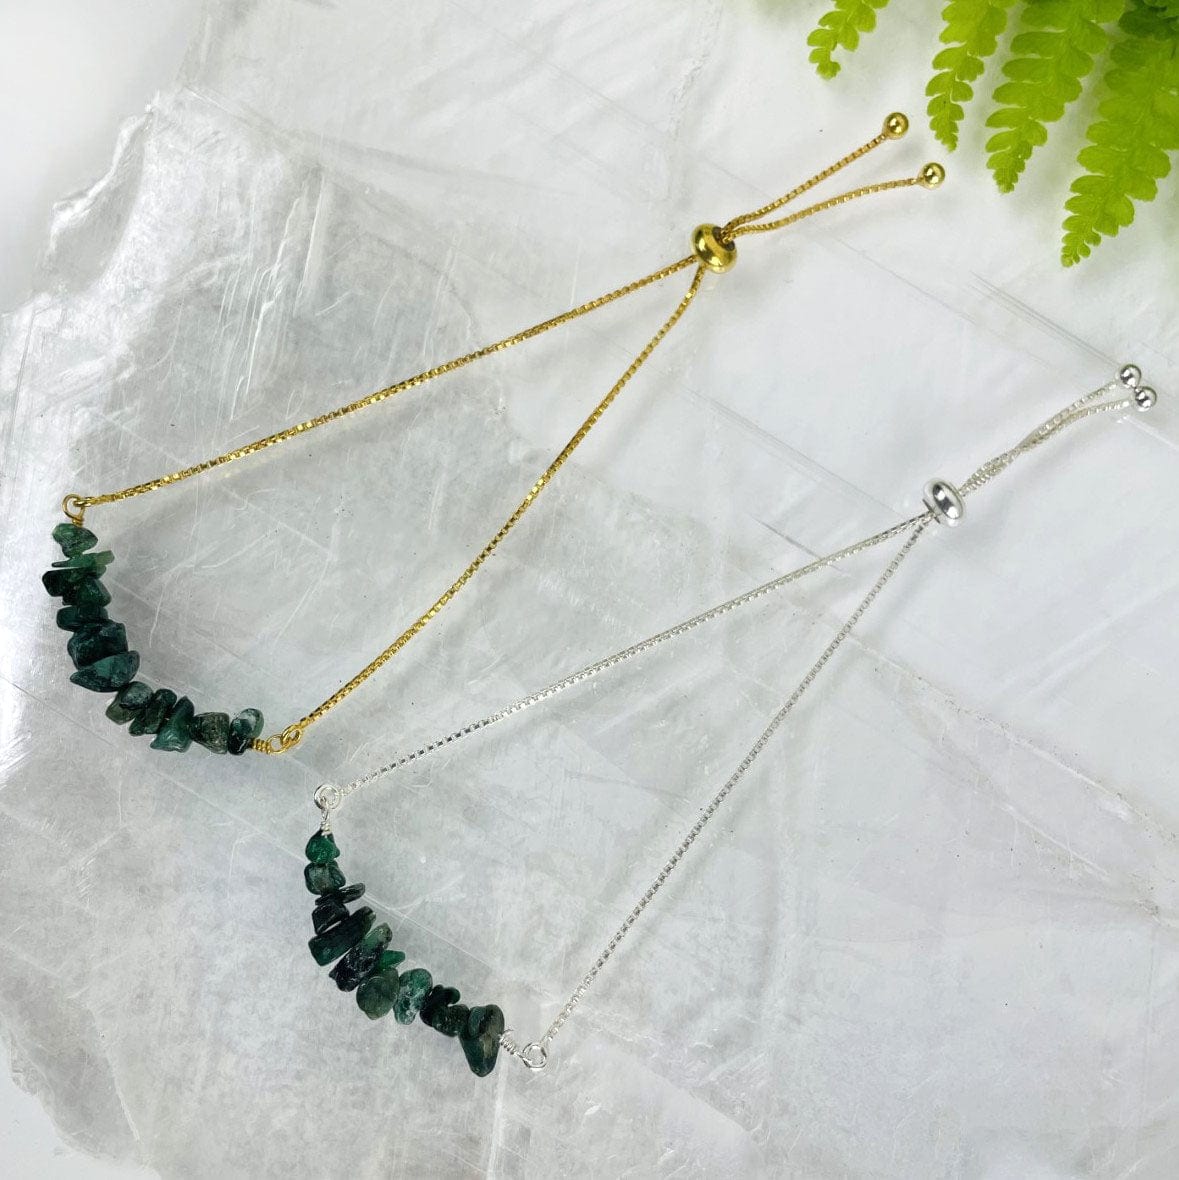 2 Emerald Stone Bracelets - May Birthstone - Gold over Sterling or Sterling Silver Adjustable Length